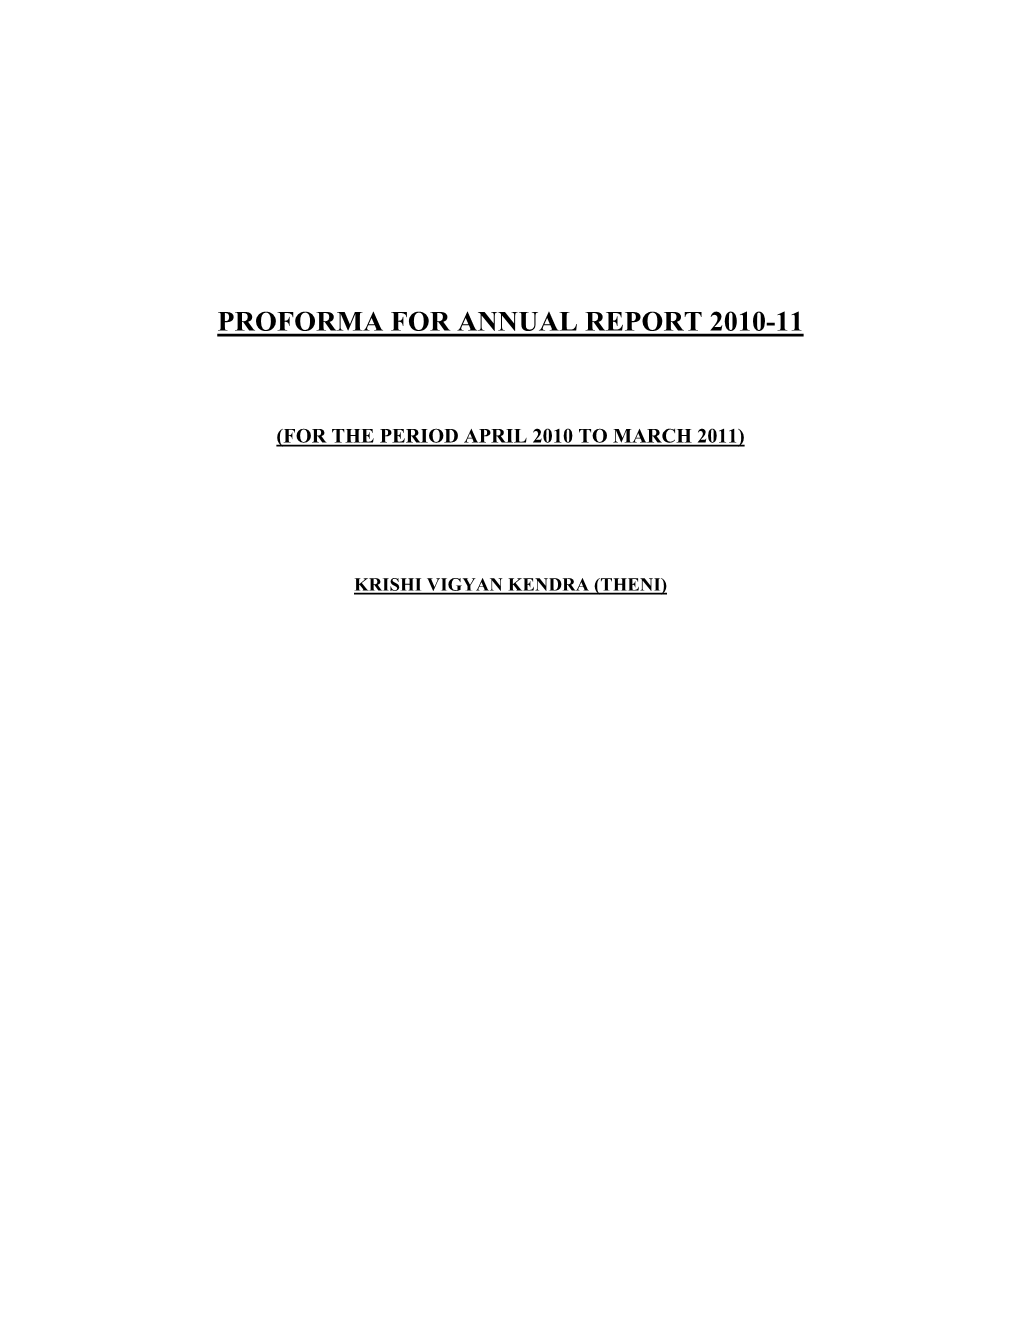 Proforma for Annual Report 2010-11